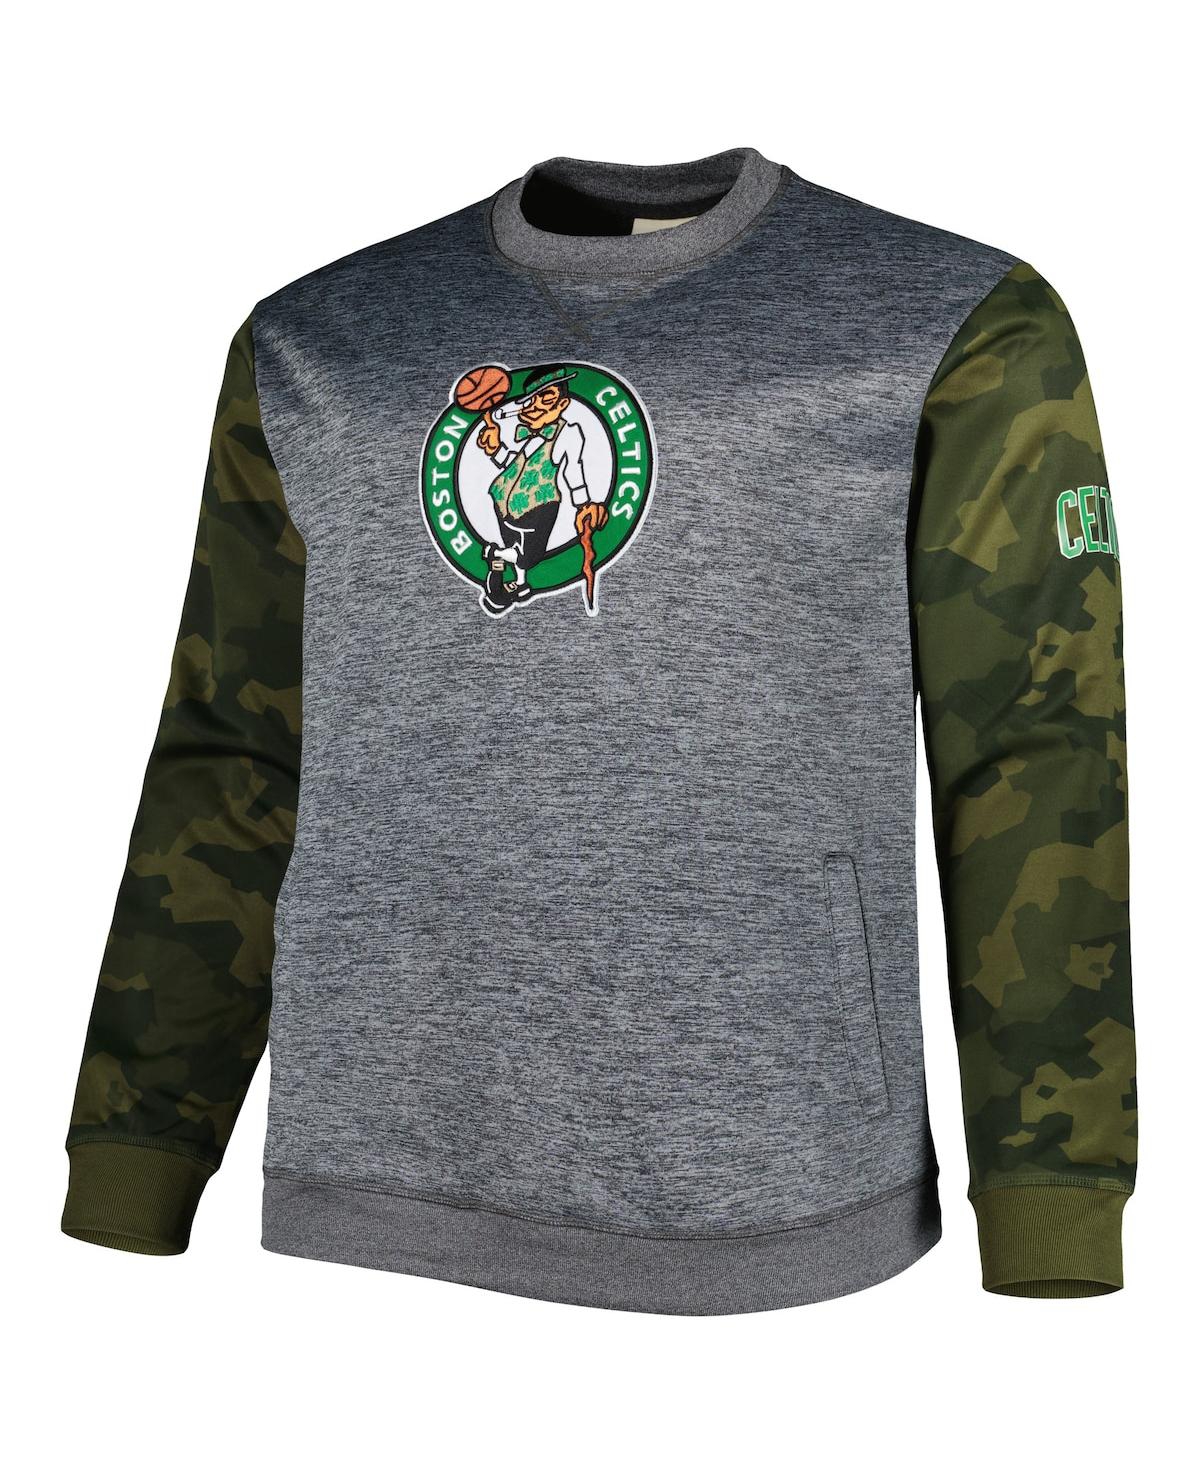 Shop Fanatics Men's Heather Charcoal Boston Celtics Big And Tall Camo Stitched Sweatshirt